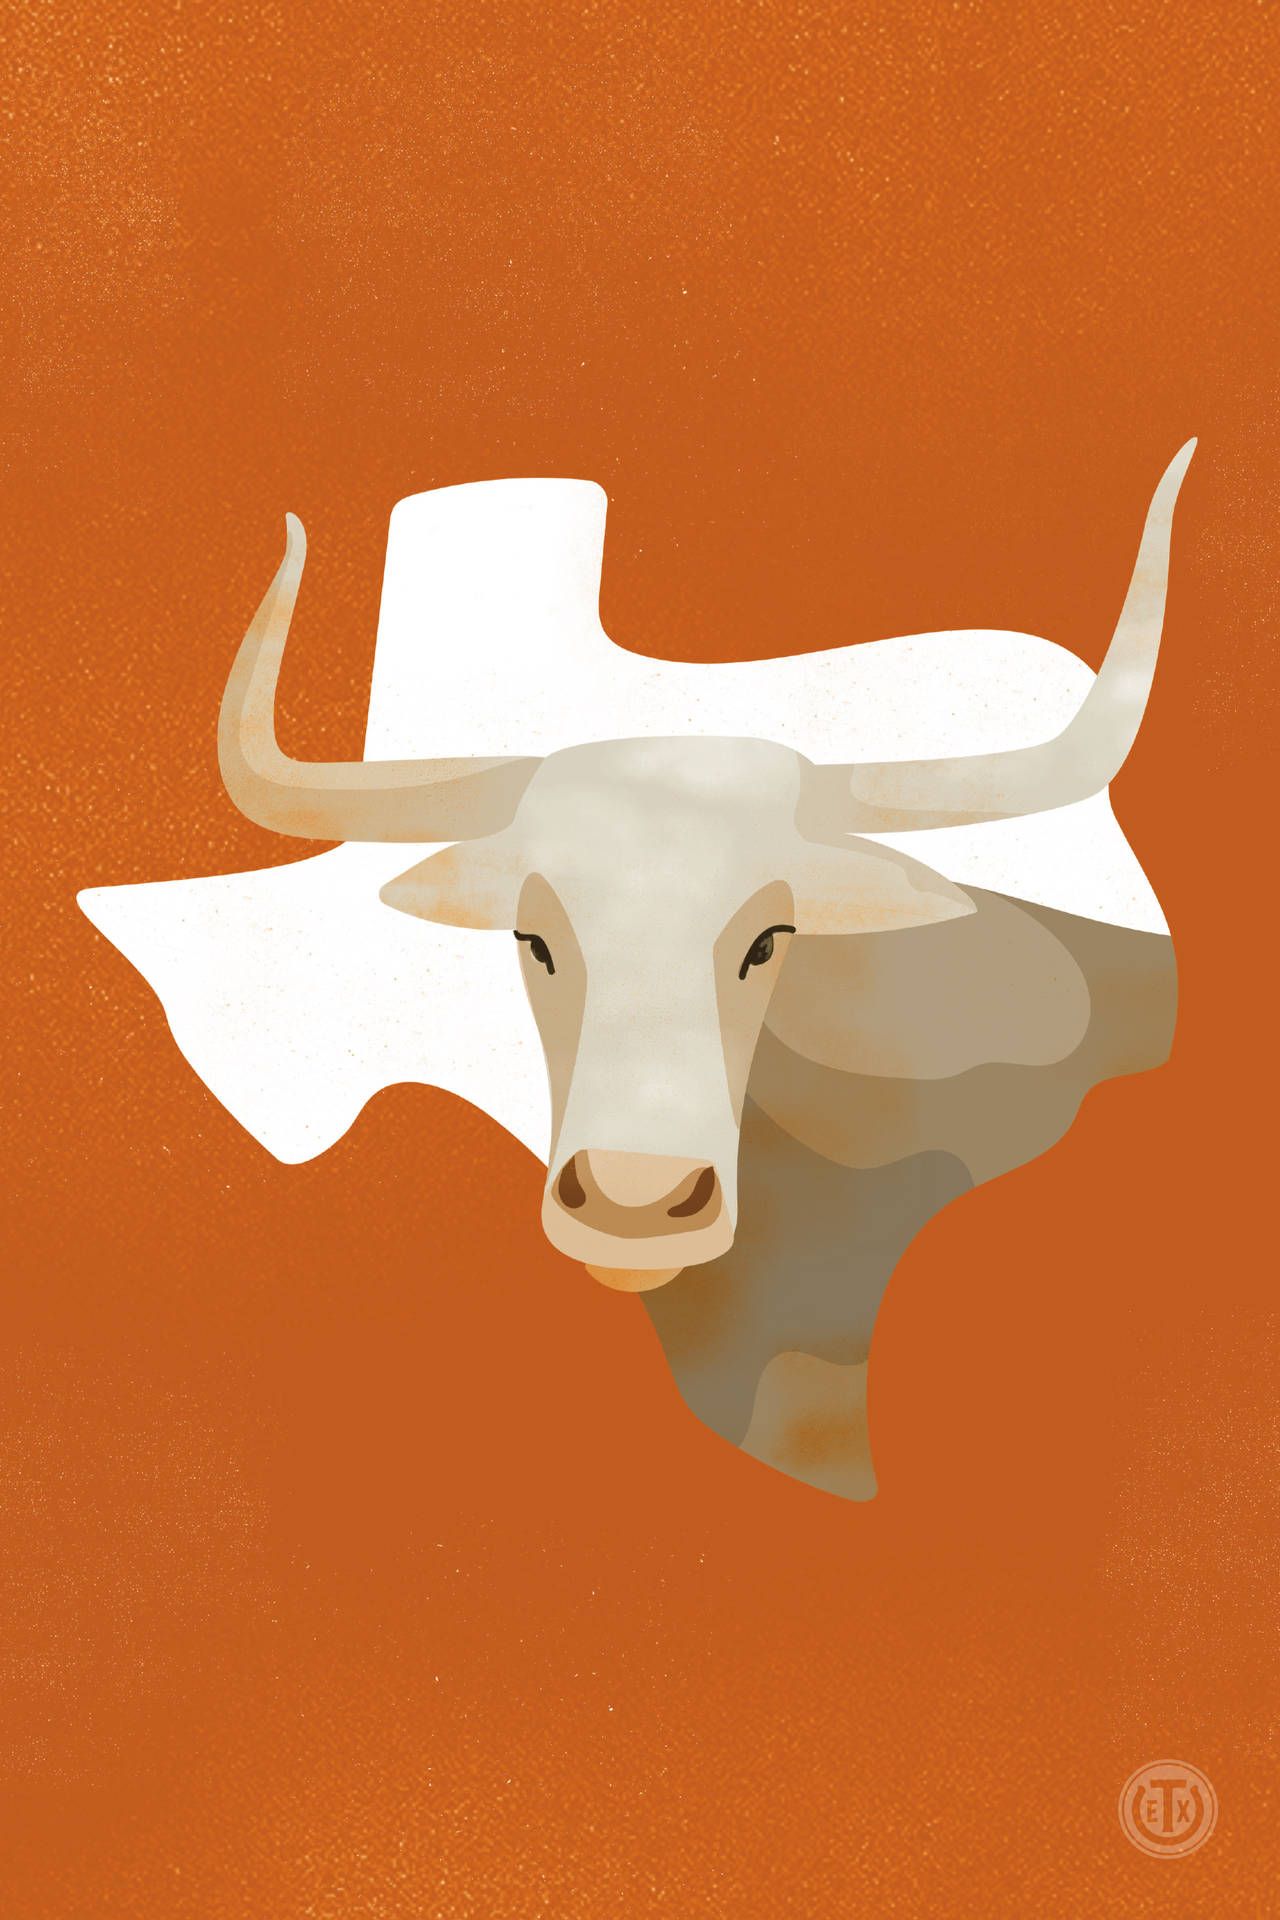 Download A Texas Longhorn On An Orange Background Wallpaper